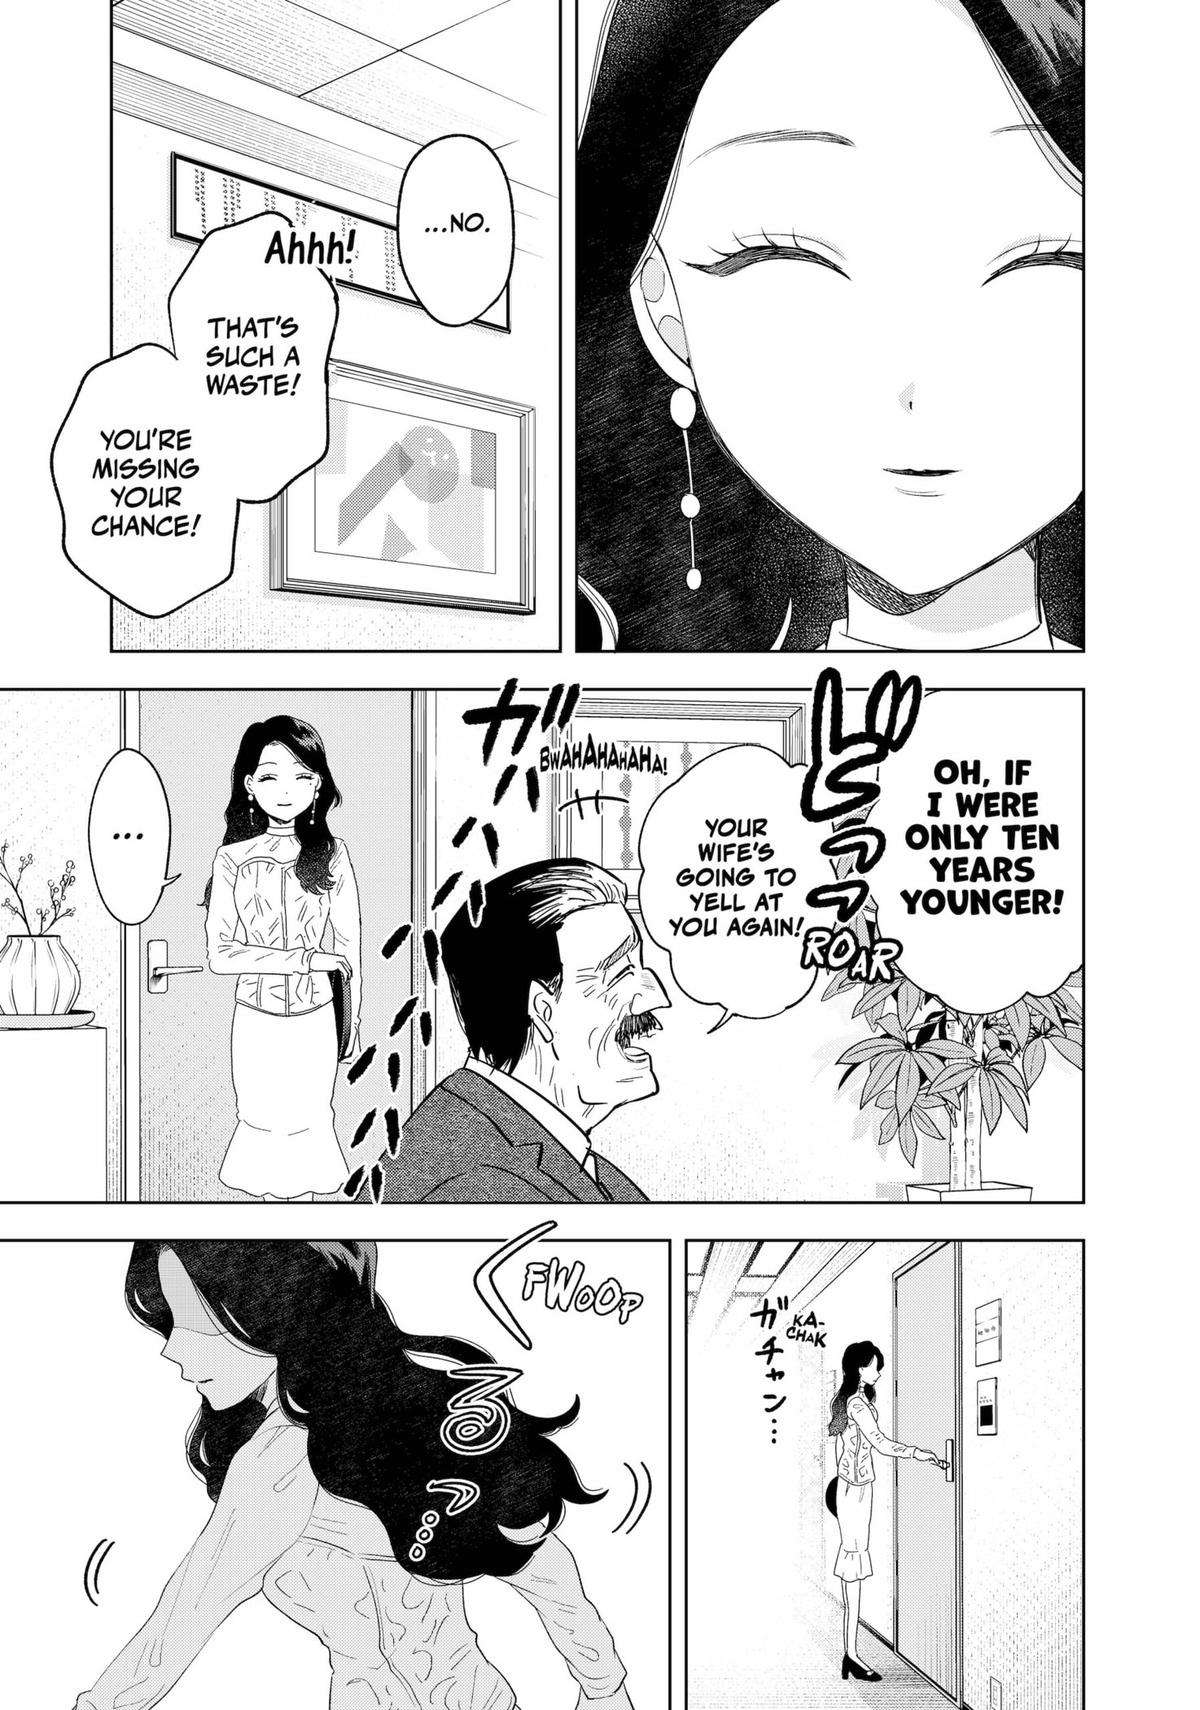 Tsuruko Returns The Favor - chapter 10 - #3